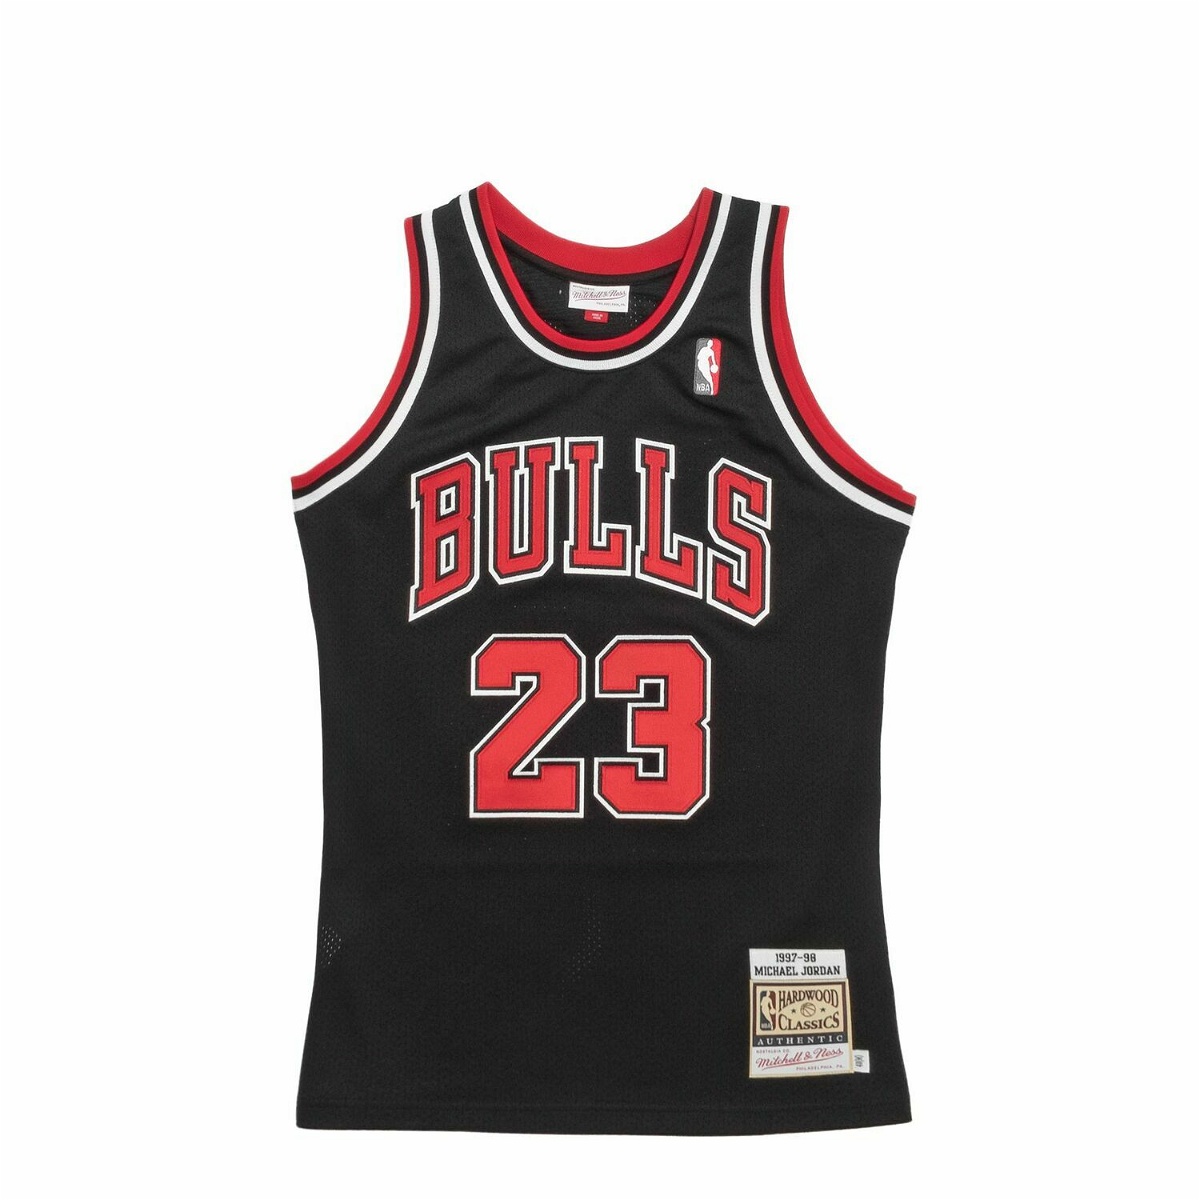 Mitchell & Ness Nba Authentic Jersey Chicago Bulls Alternate 1997 98 Michael Jordan #23 Black - Mens - Jerseys